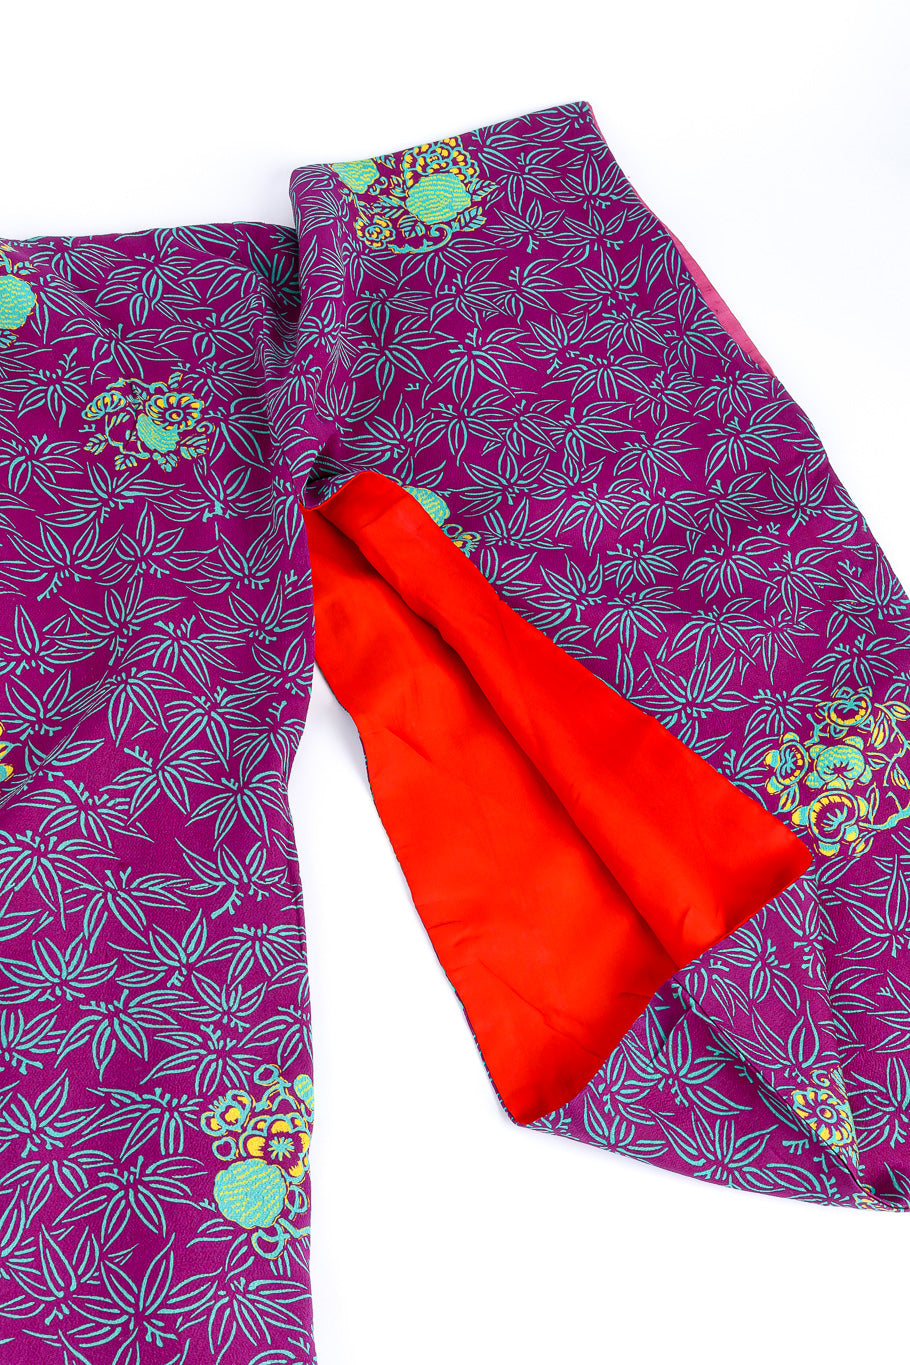 Floral leaf fabric sleeve detail @recessla